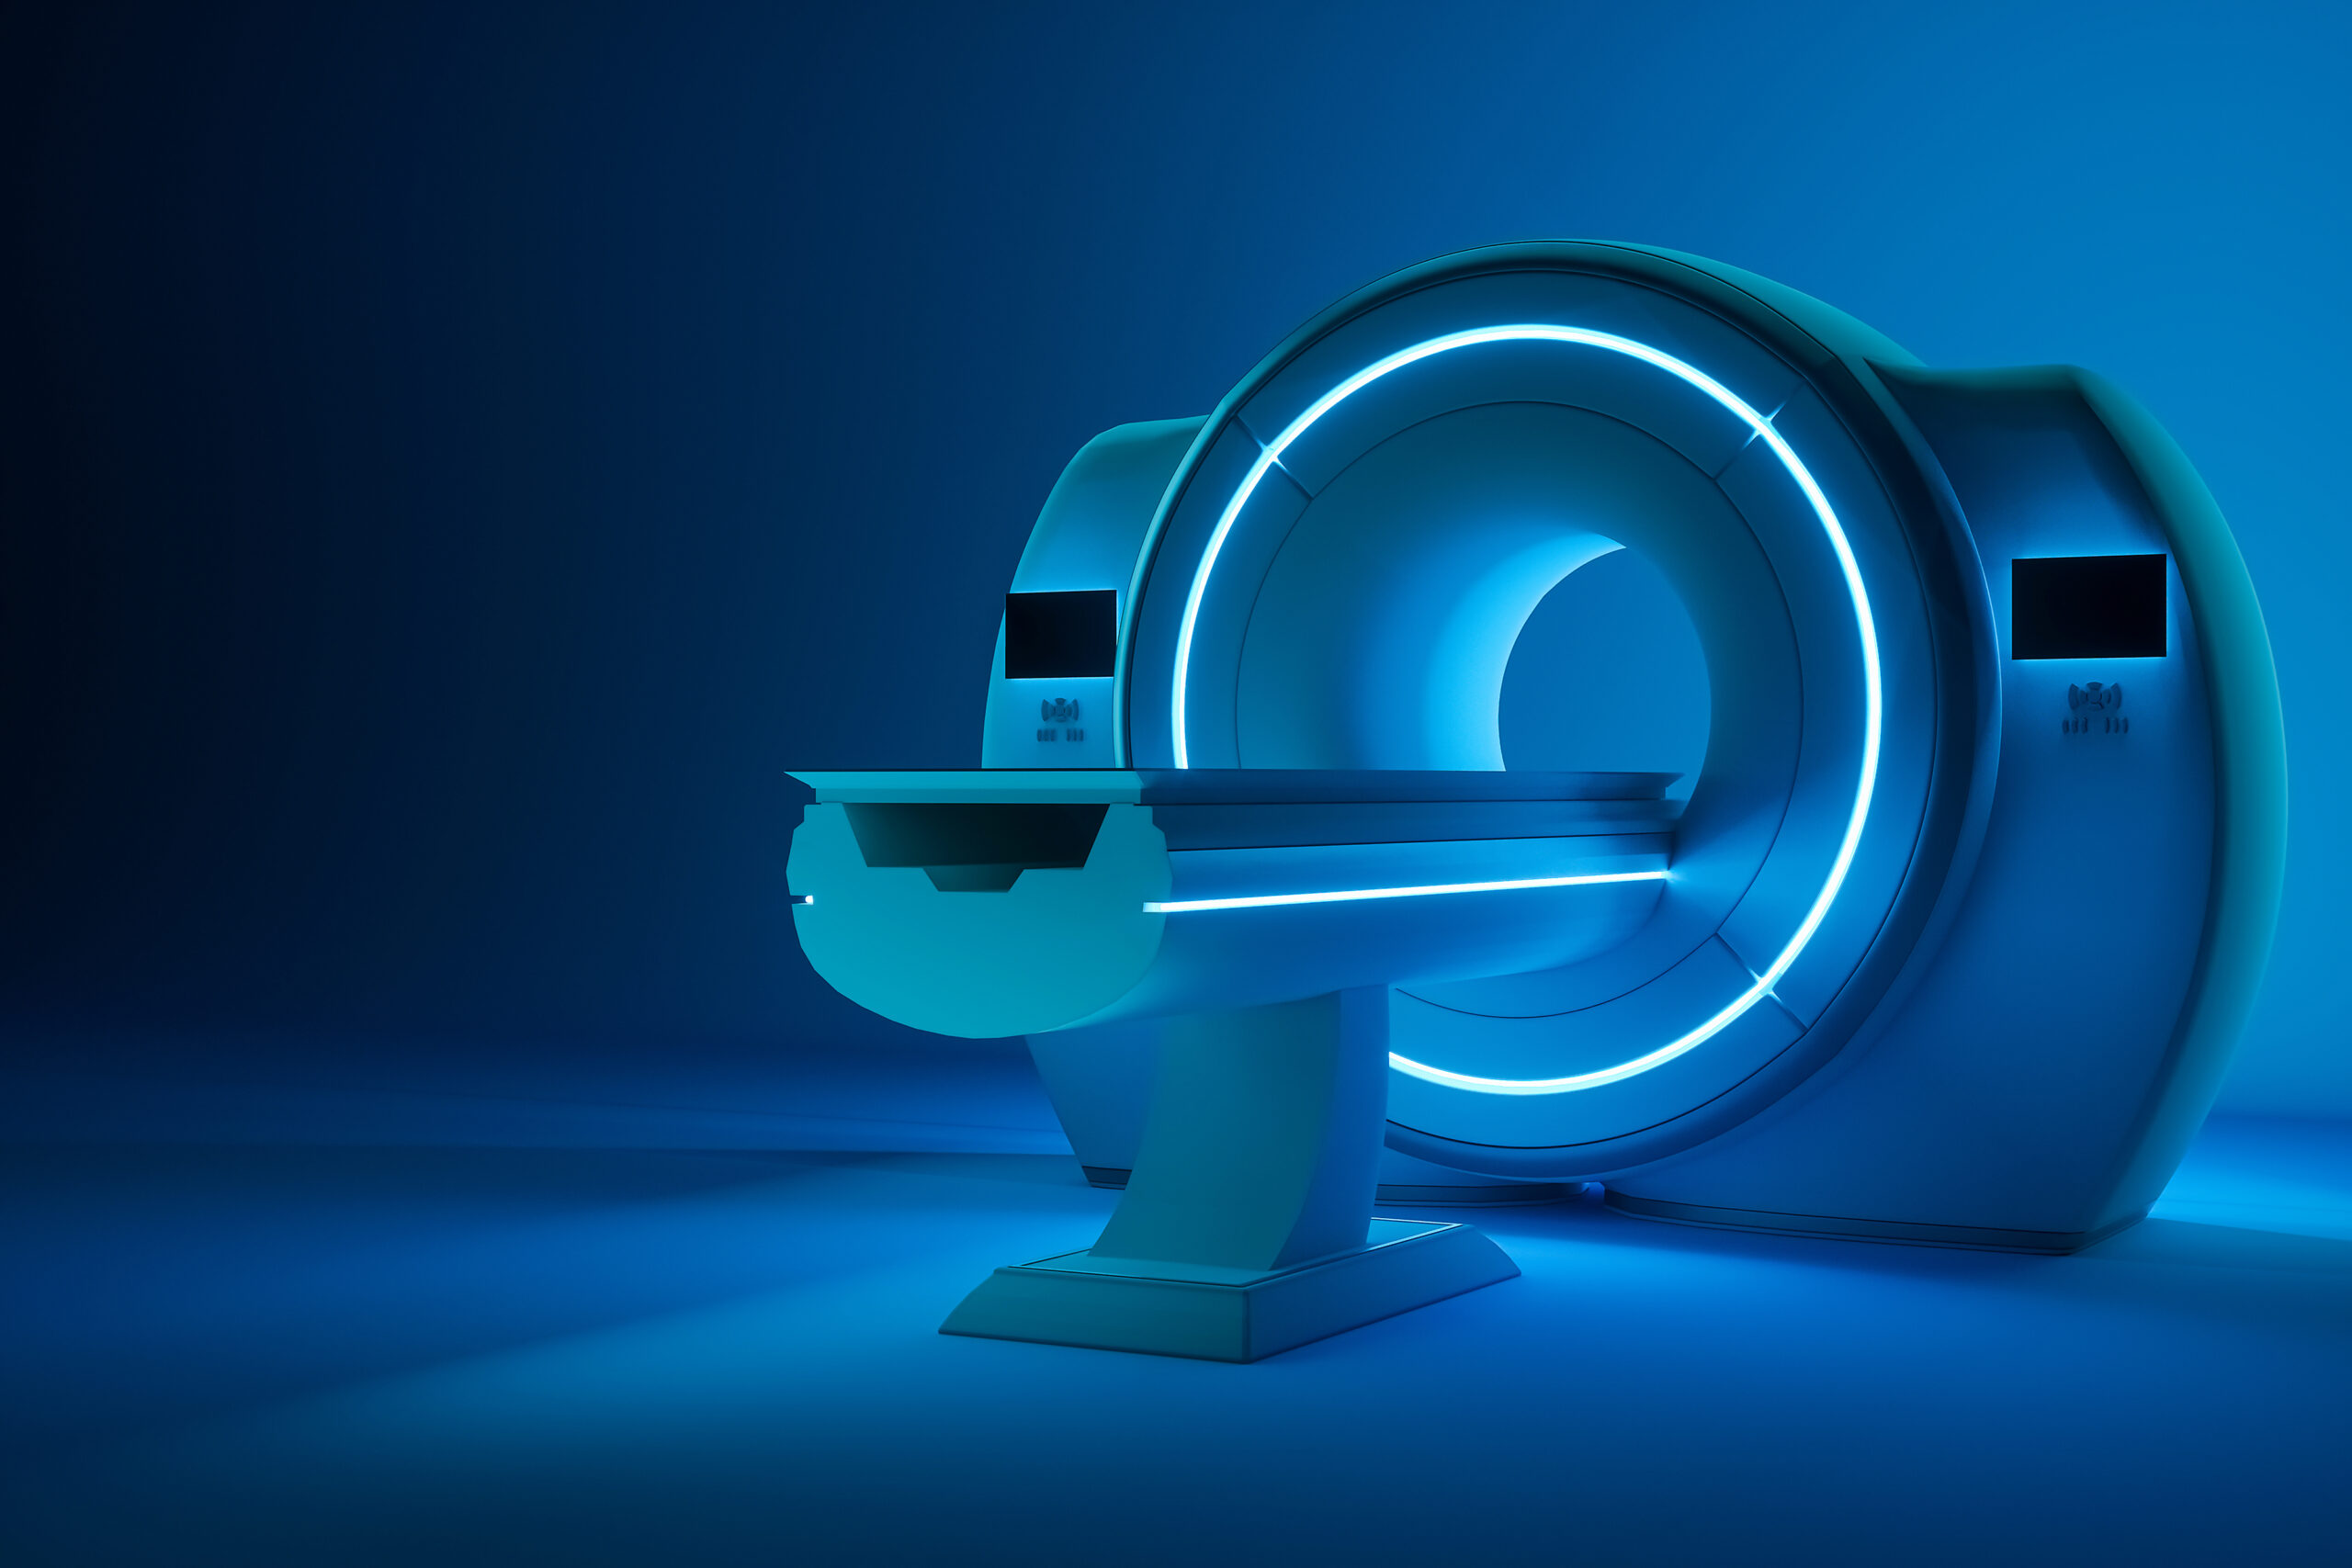 MRI machine, magnetic resonance imaging machine on a dark blue background. Concept medicine, technology, future. 3D rendering, 3D illustration, copy space.